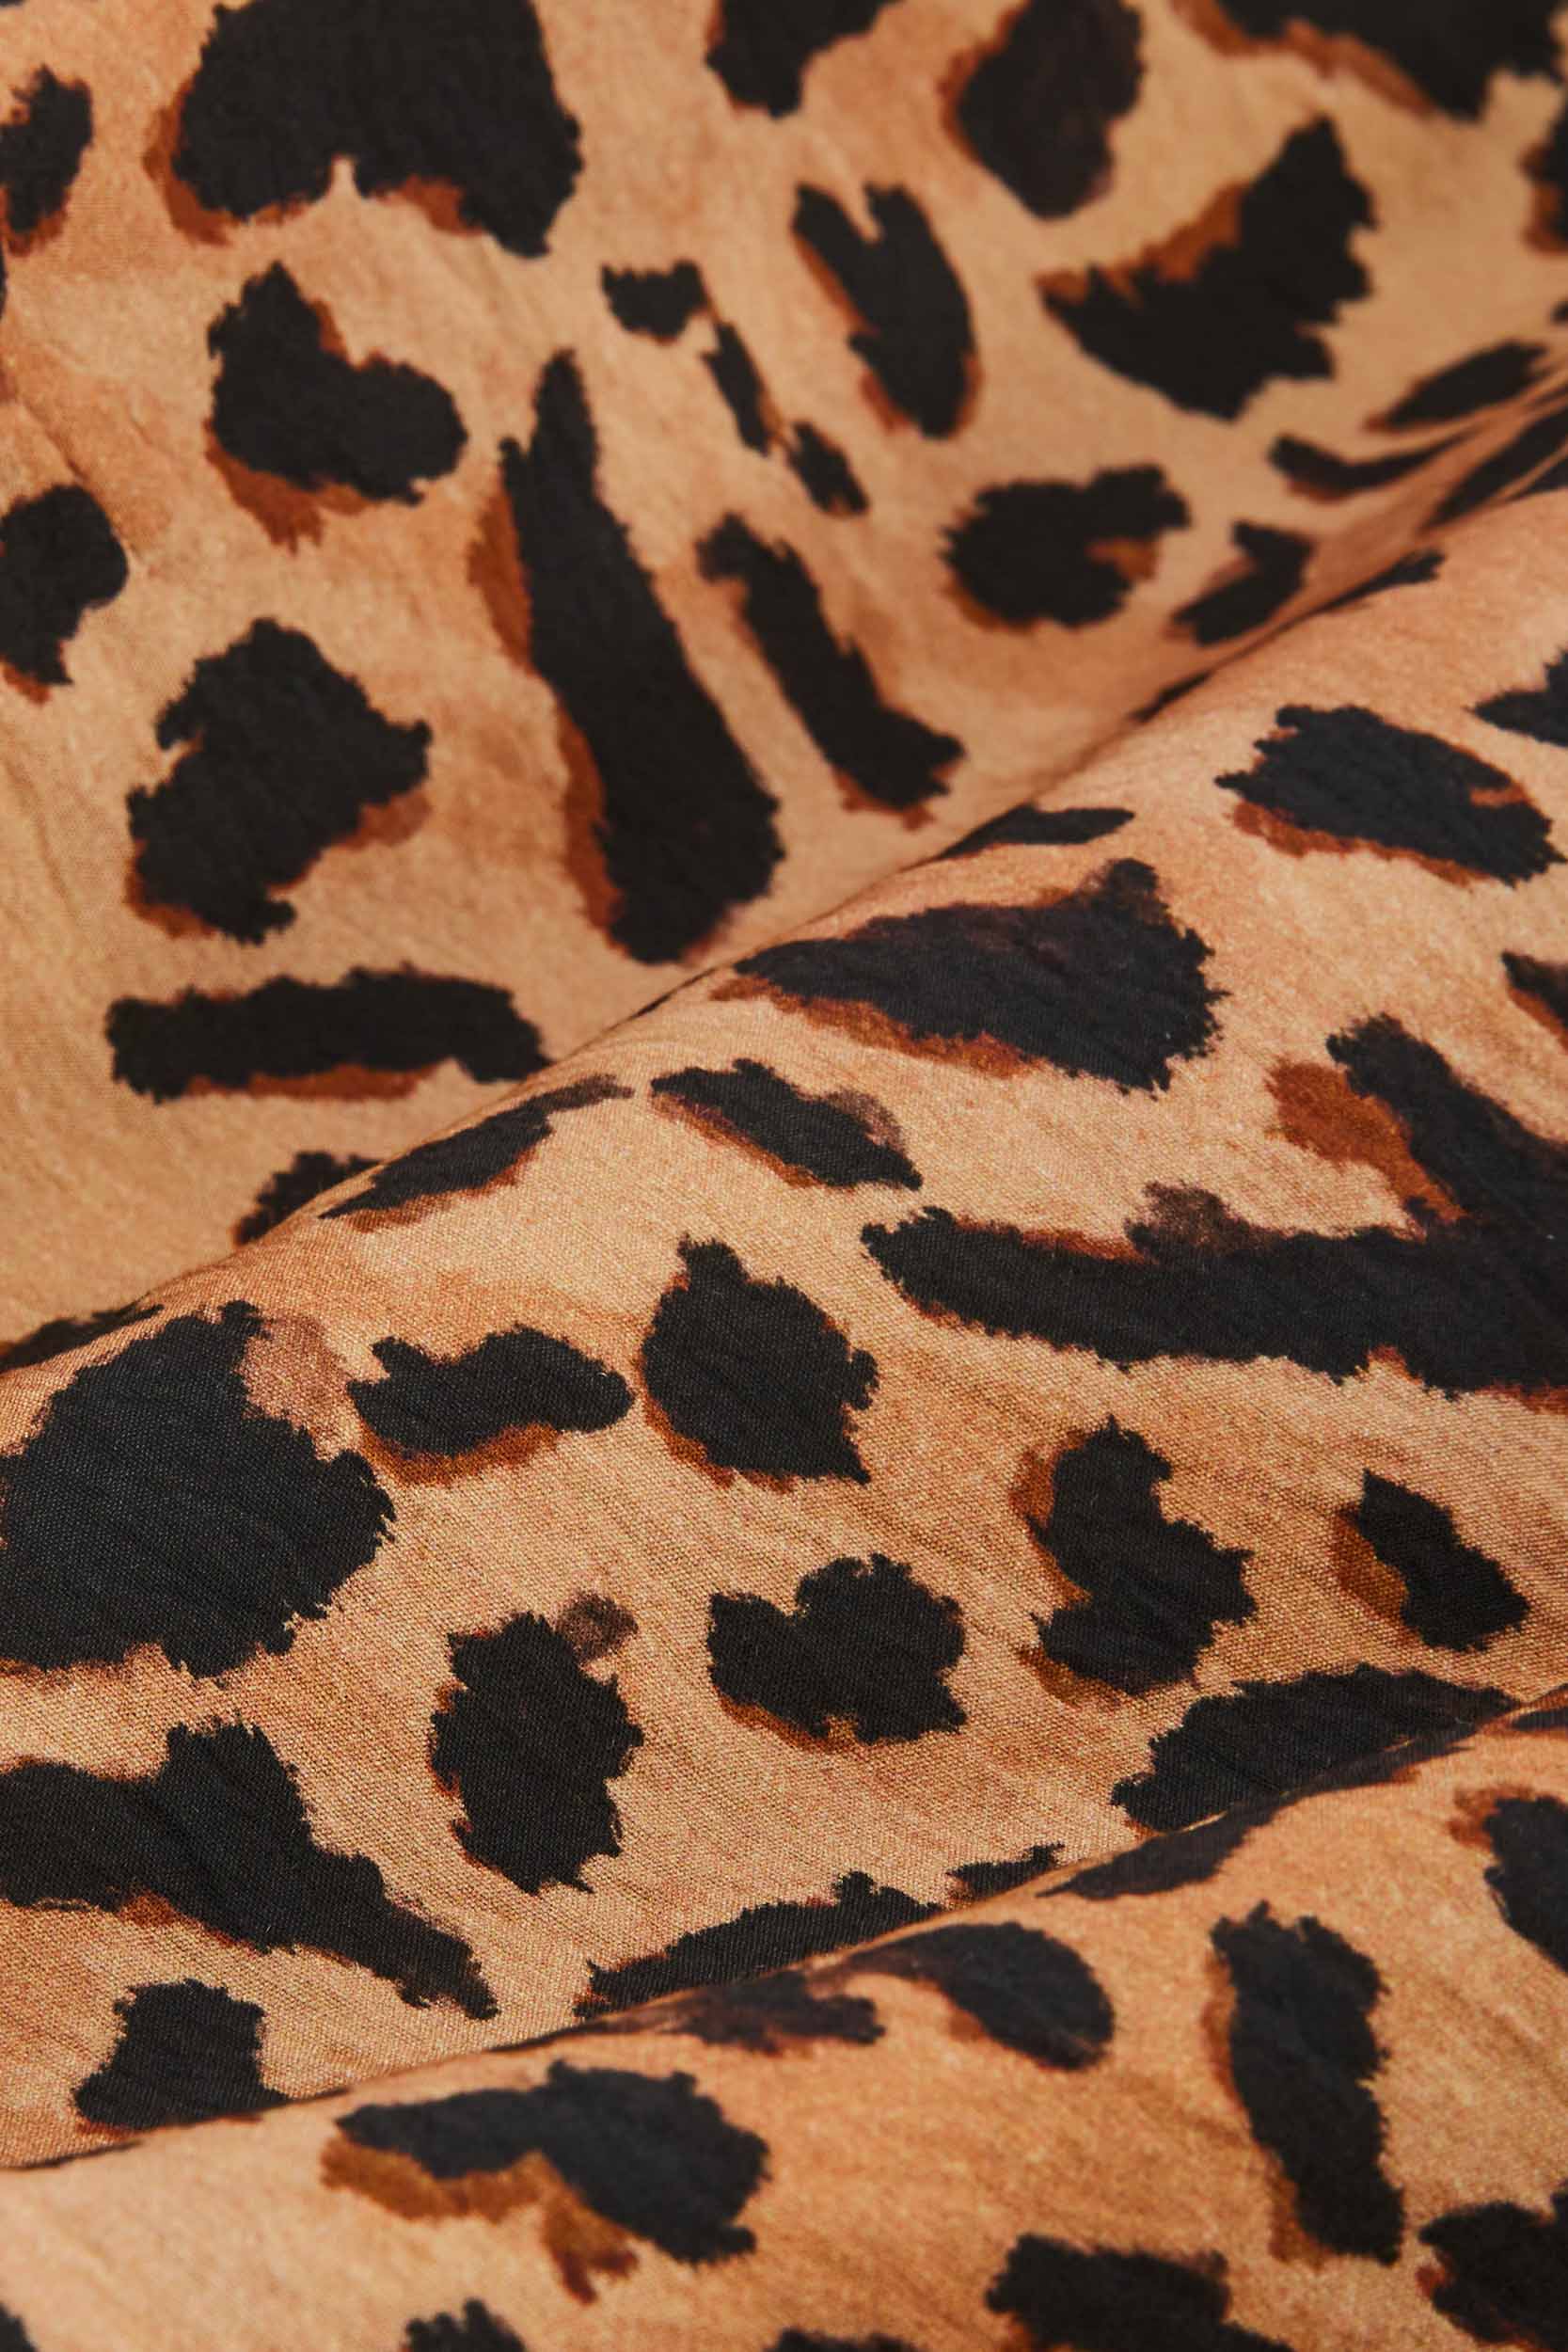 Xoxo cheetah cappuccino dress